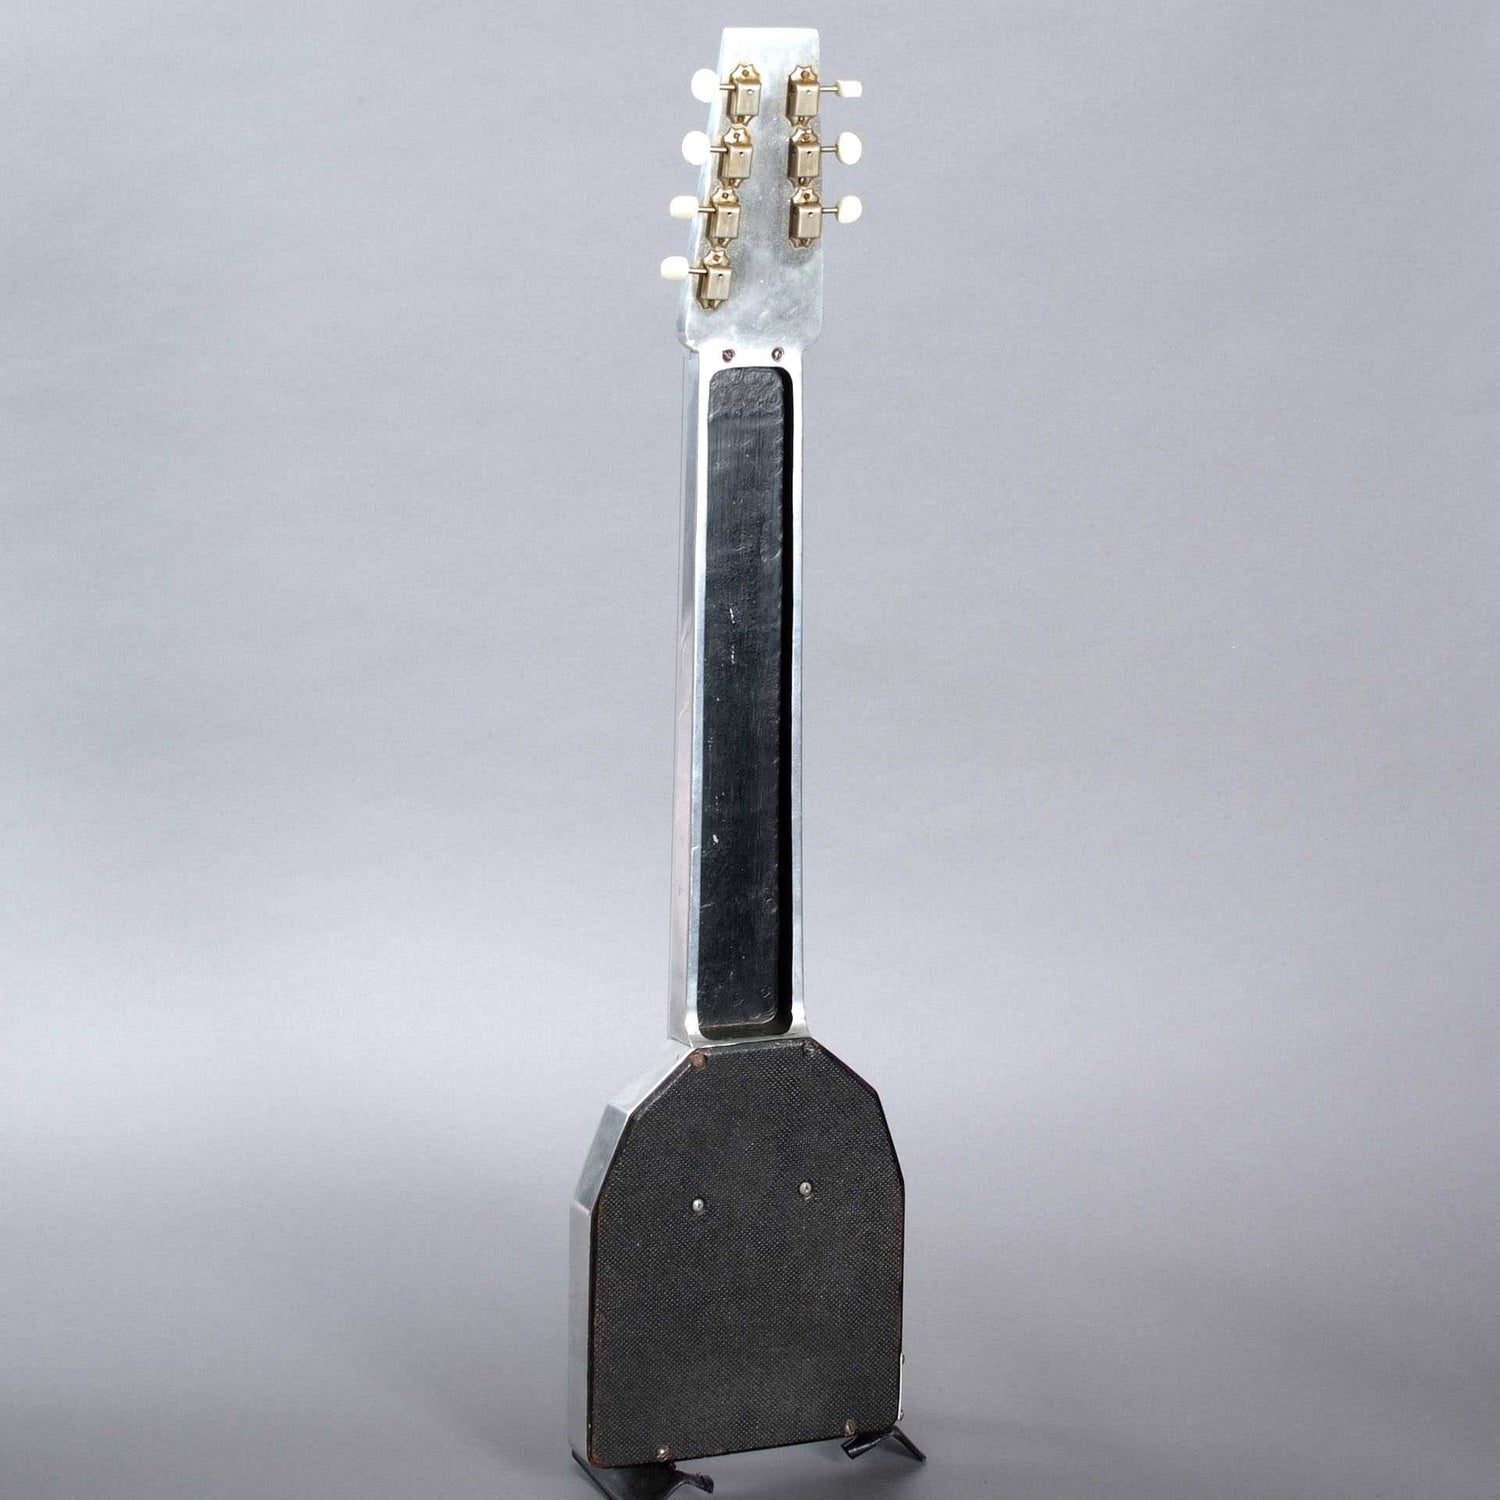 Image 10 of No Name Lap Steel (1940's?) - SKU# 185U-761 : Product Type Lap & Pedal Steel Guitars : Elderly Instruments